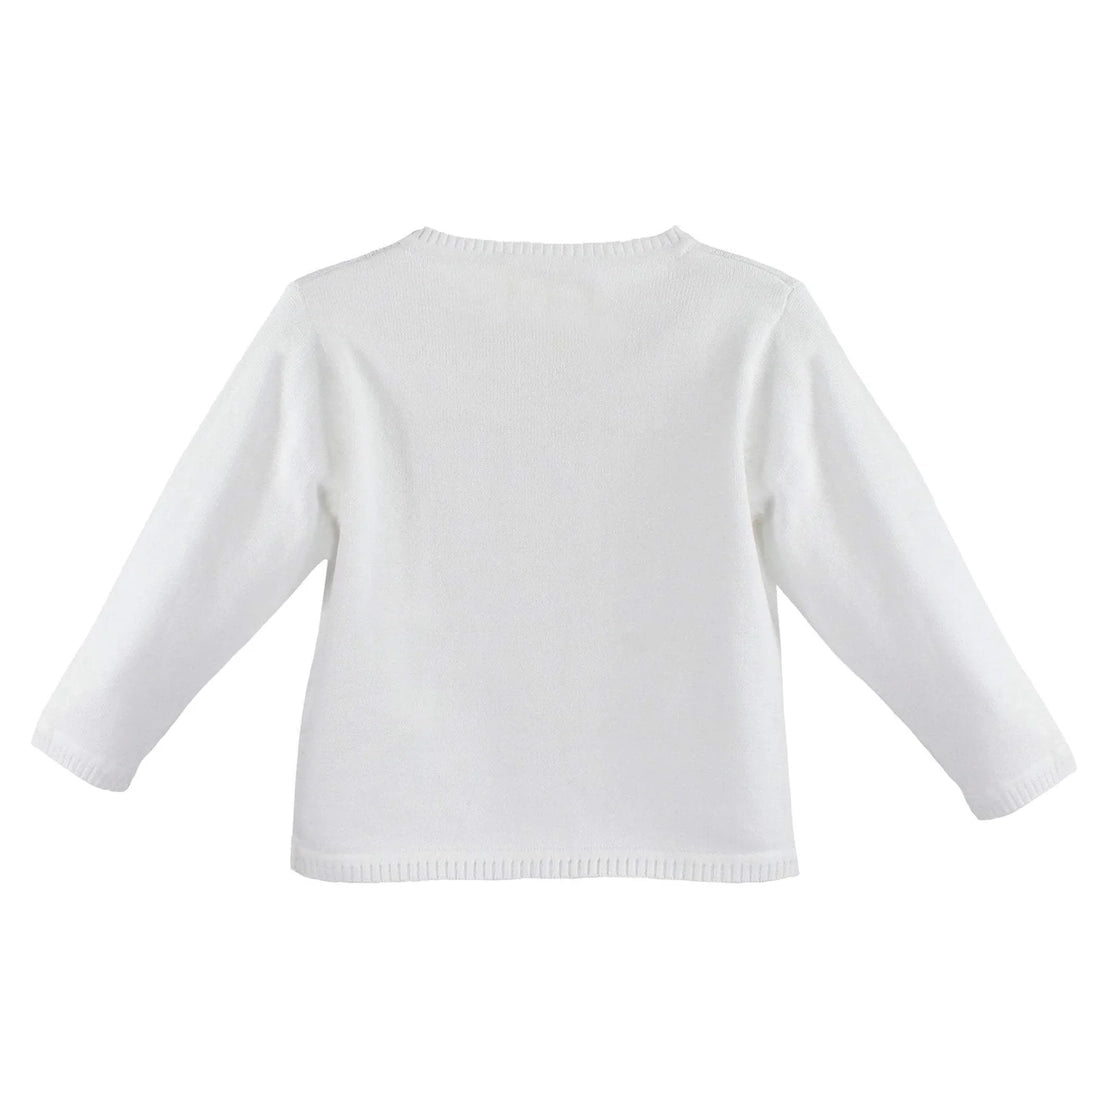 Ladder Edge Cardigan Sweater in White  - Doodlebug's Children's Boutique